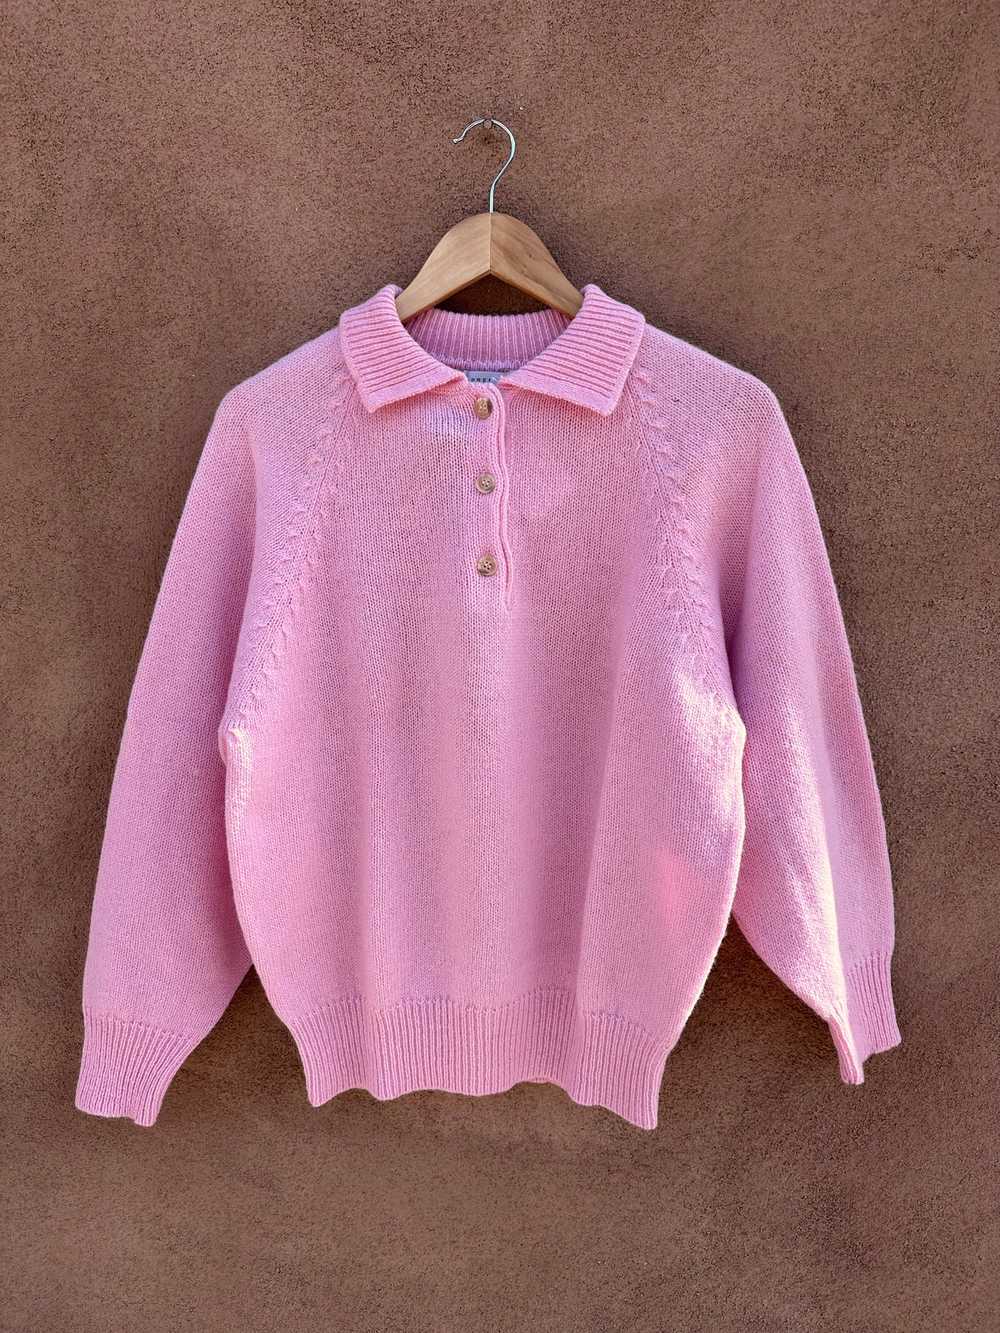 Pink Shetland Pure Wool Collared Sweater - image 1